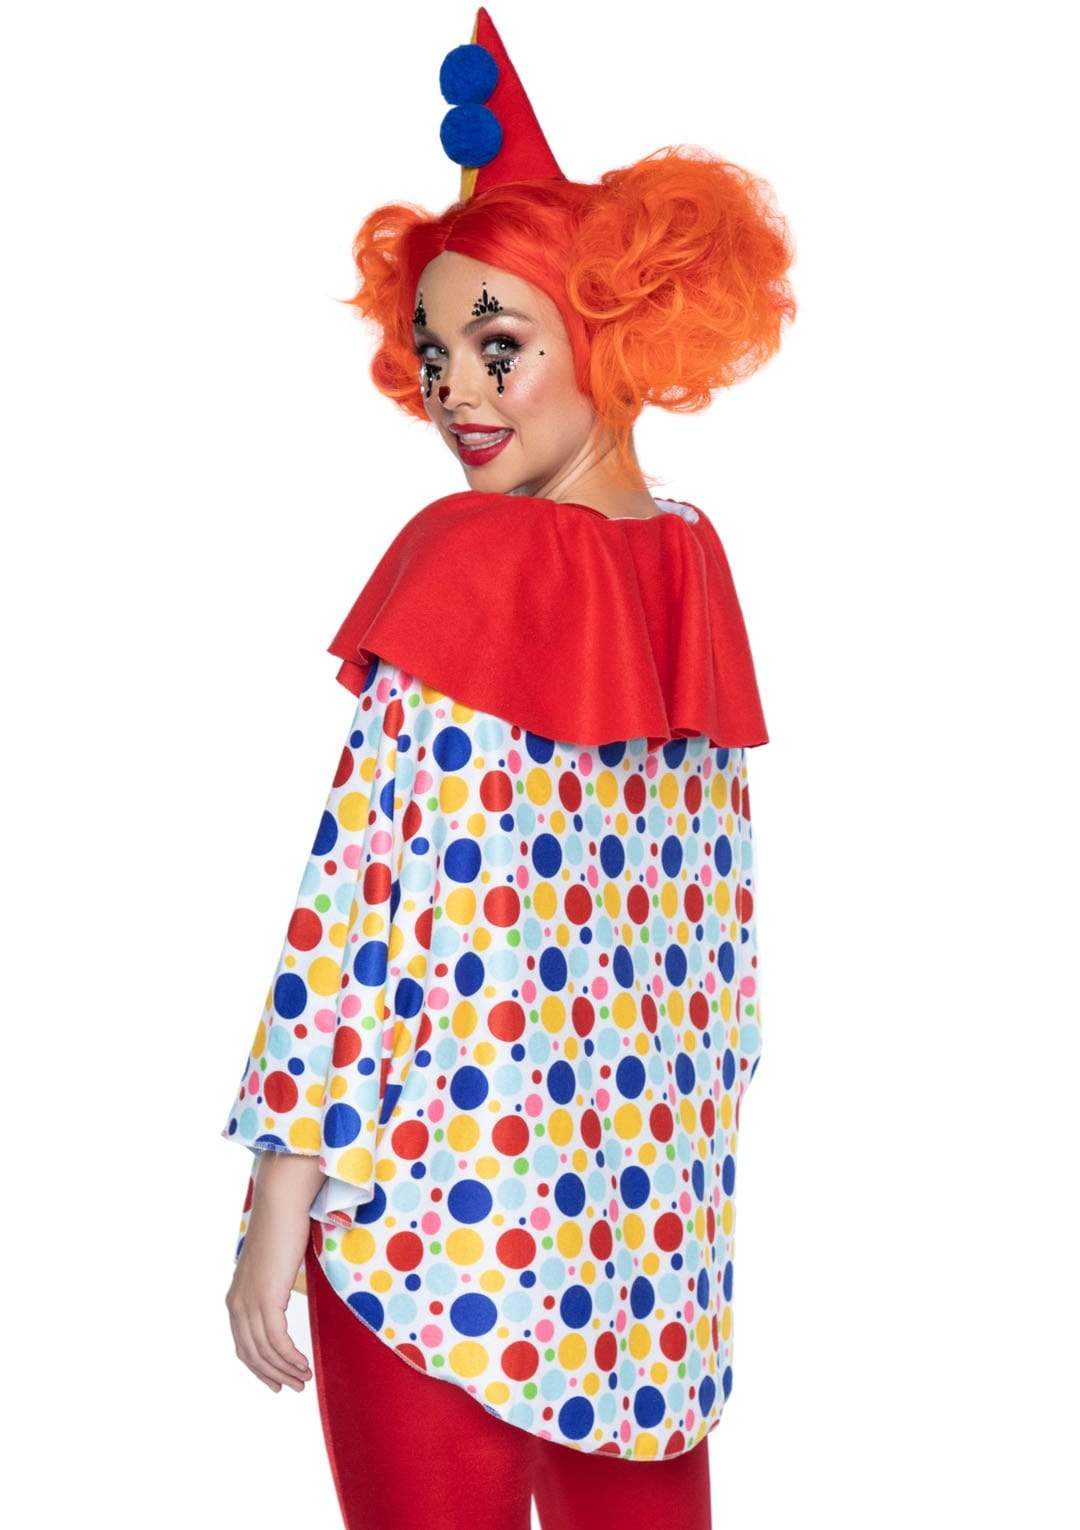 Polka-Dot Clown Poncho with Pom Pom Accents and Clown Hat